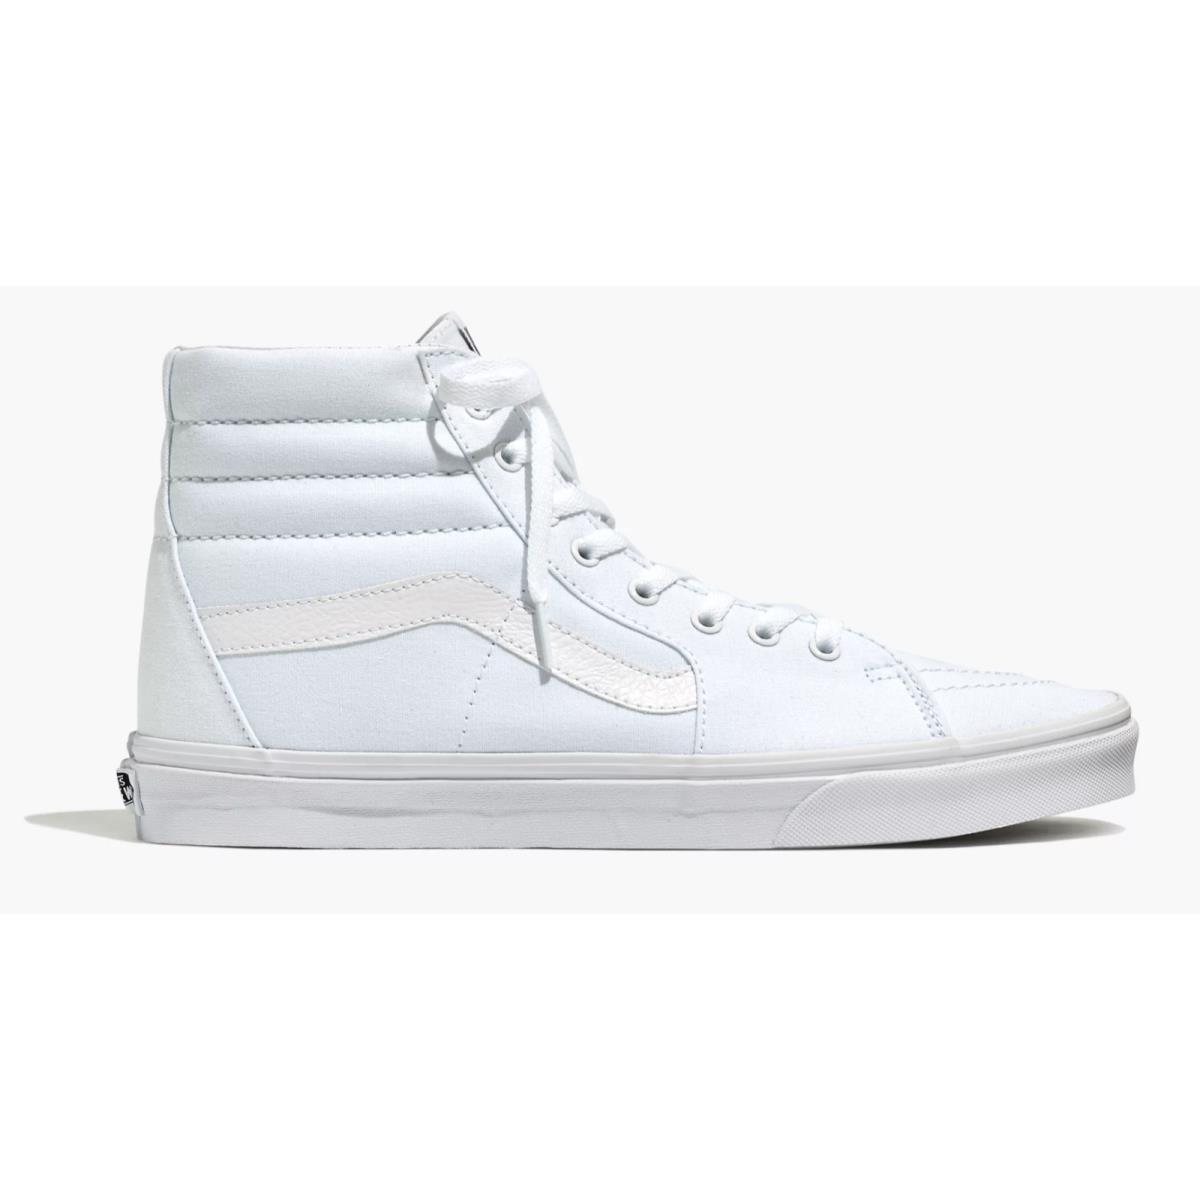 Vans SK8-HI High Top Men`s Classic Skate Sneakers Shoes Breathable White